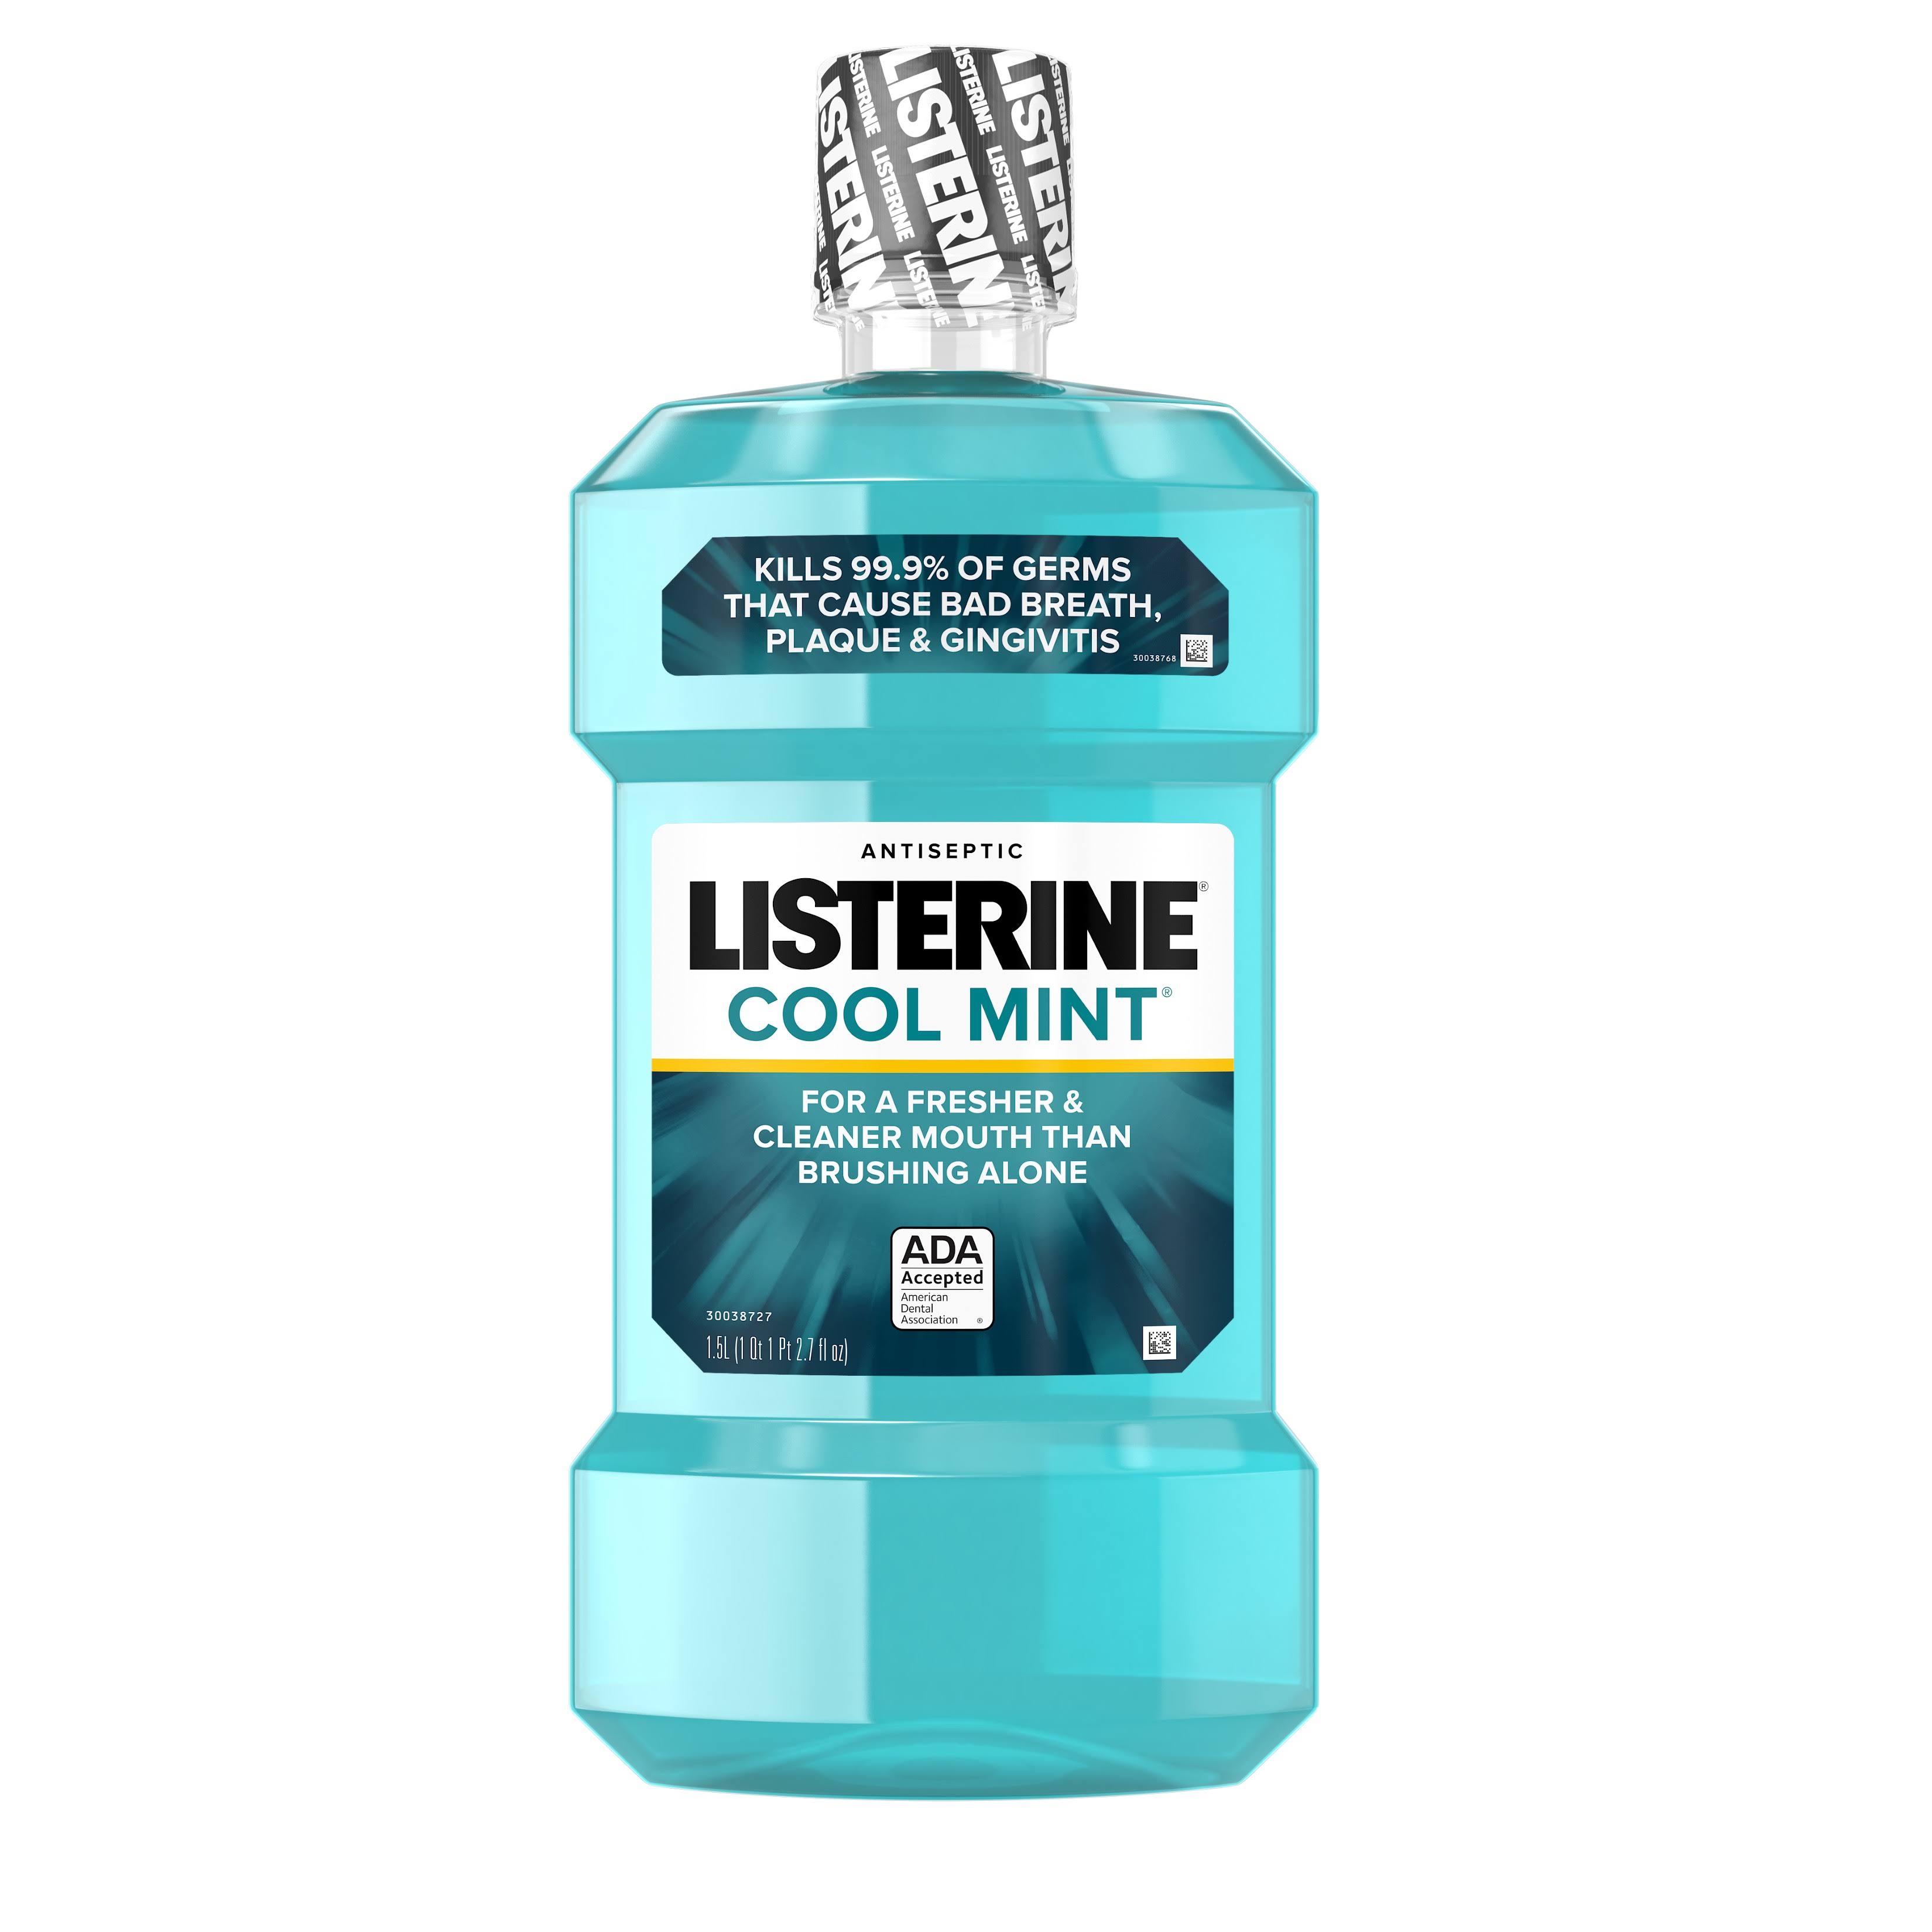 Listerine Antiseptic Mouthwash - Cool Mint, 1l